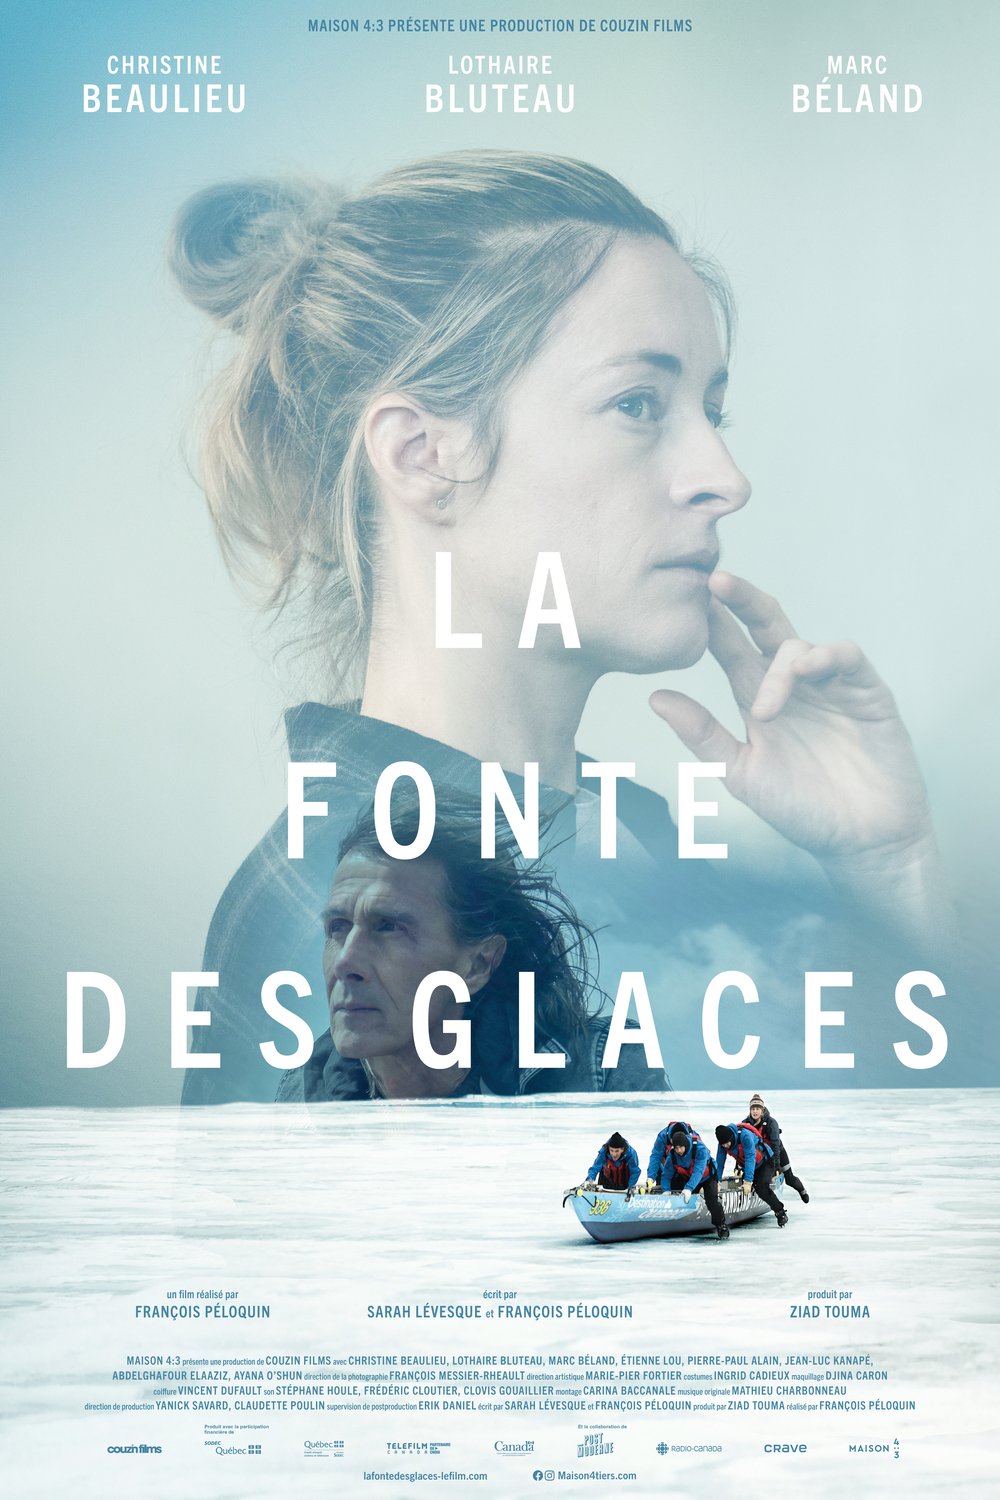 Poster of the movie La fonte des glaces